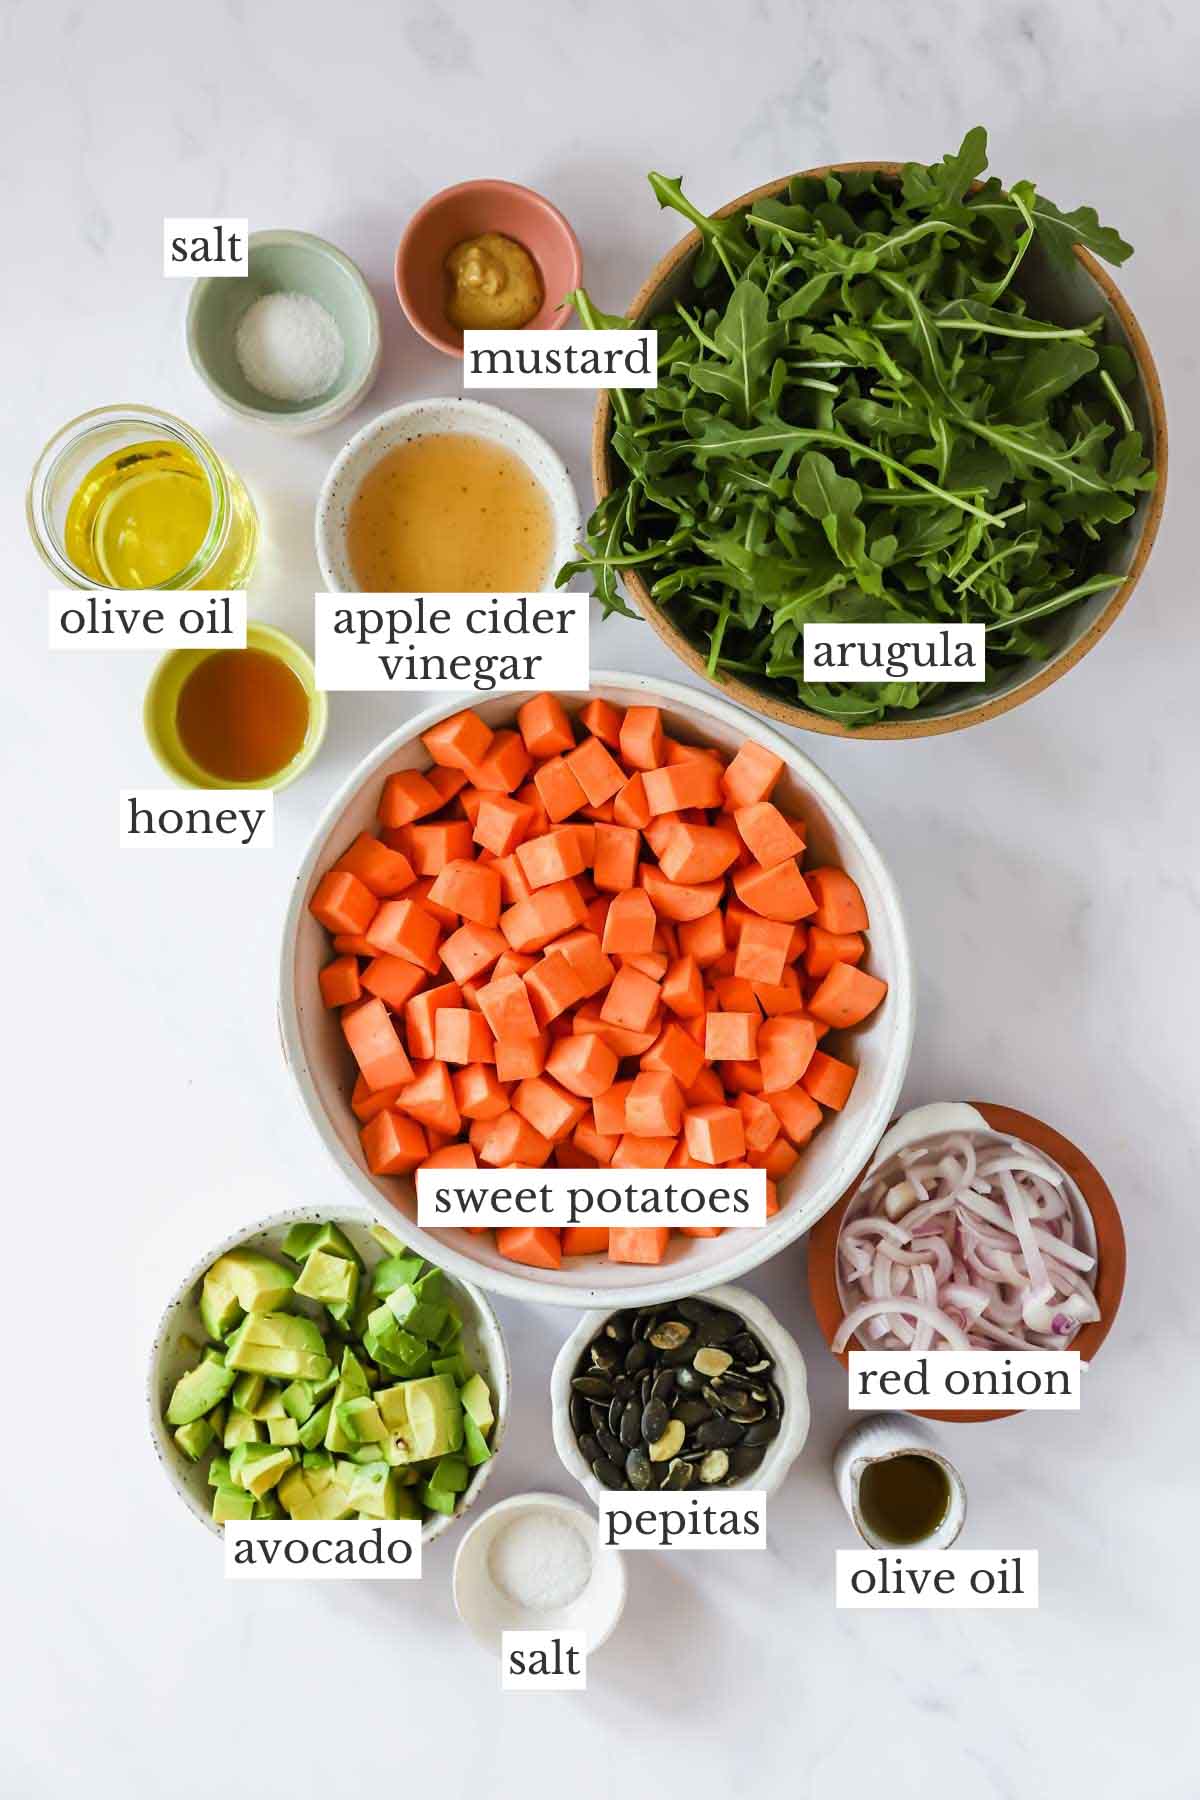 Ingredients to make a sweet potato salad with a homemade vinaigrette.